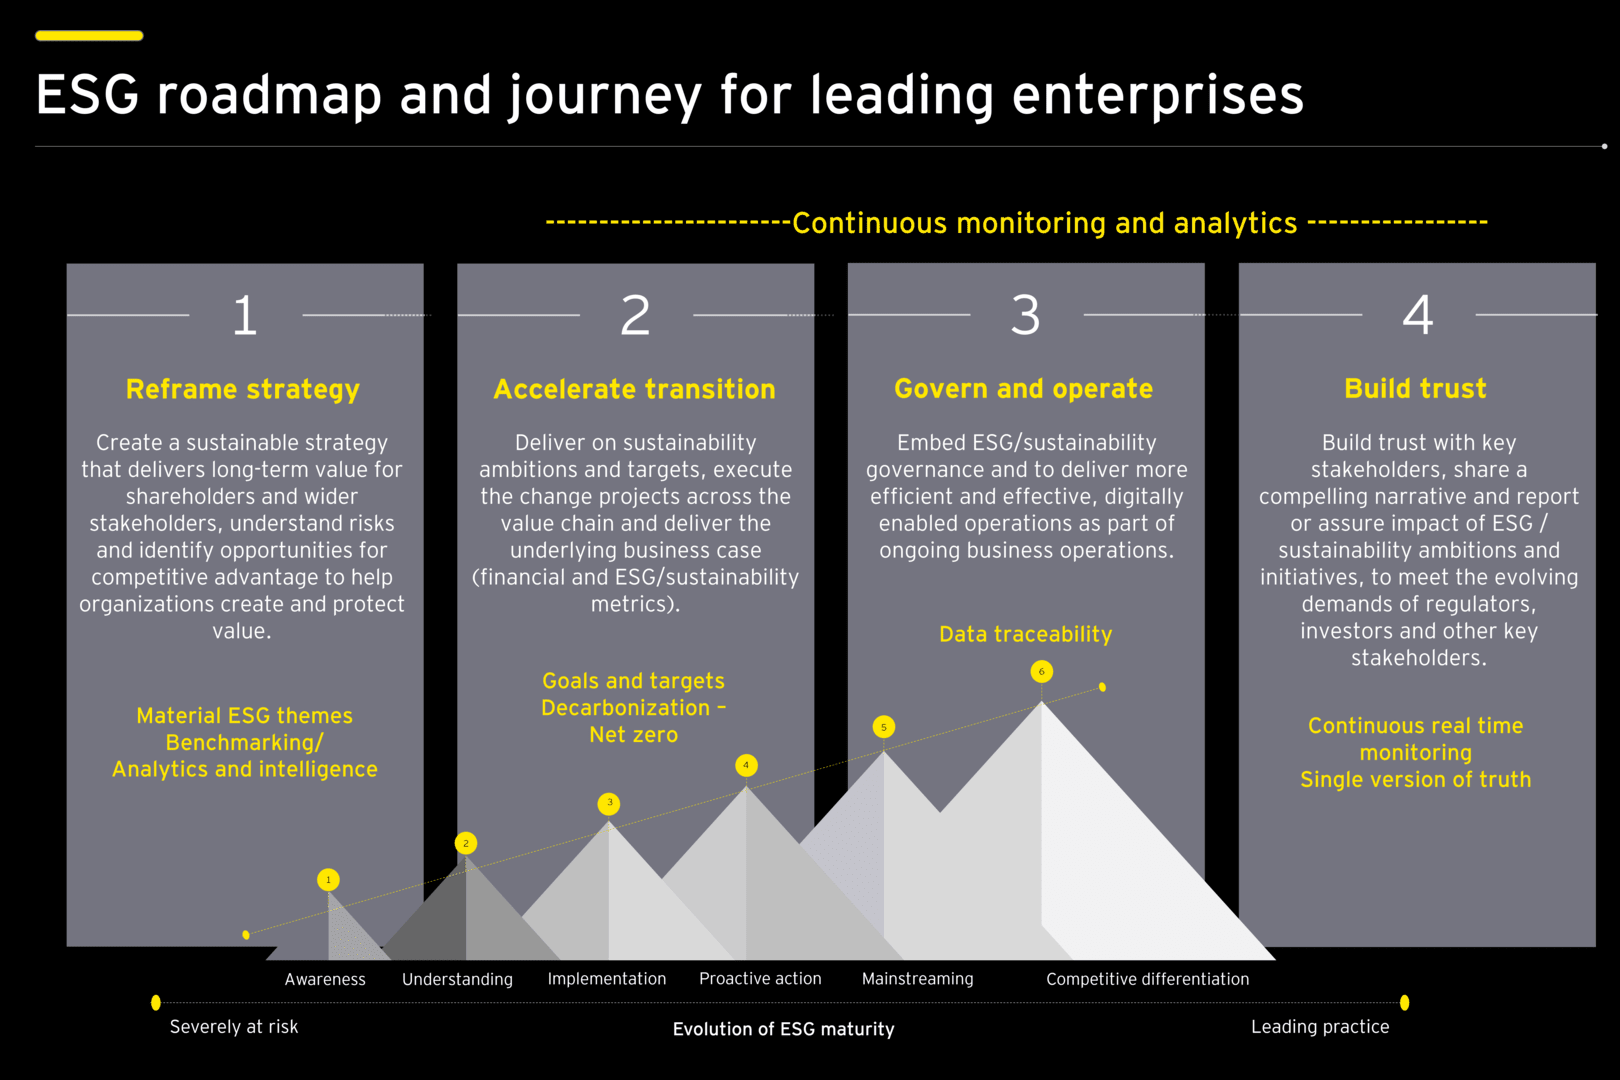 ESG transformation journey for leading enterprises